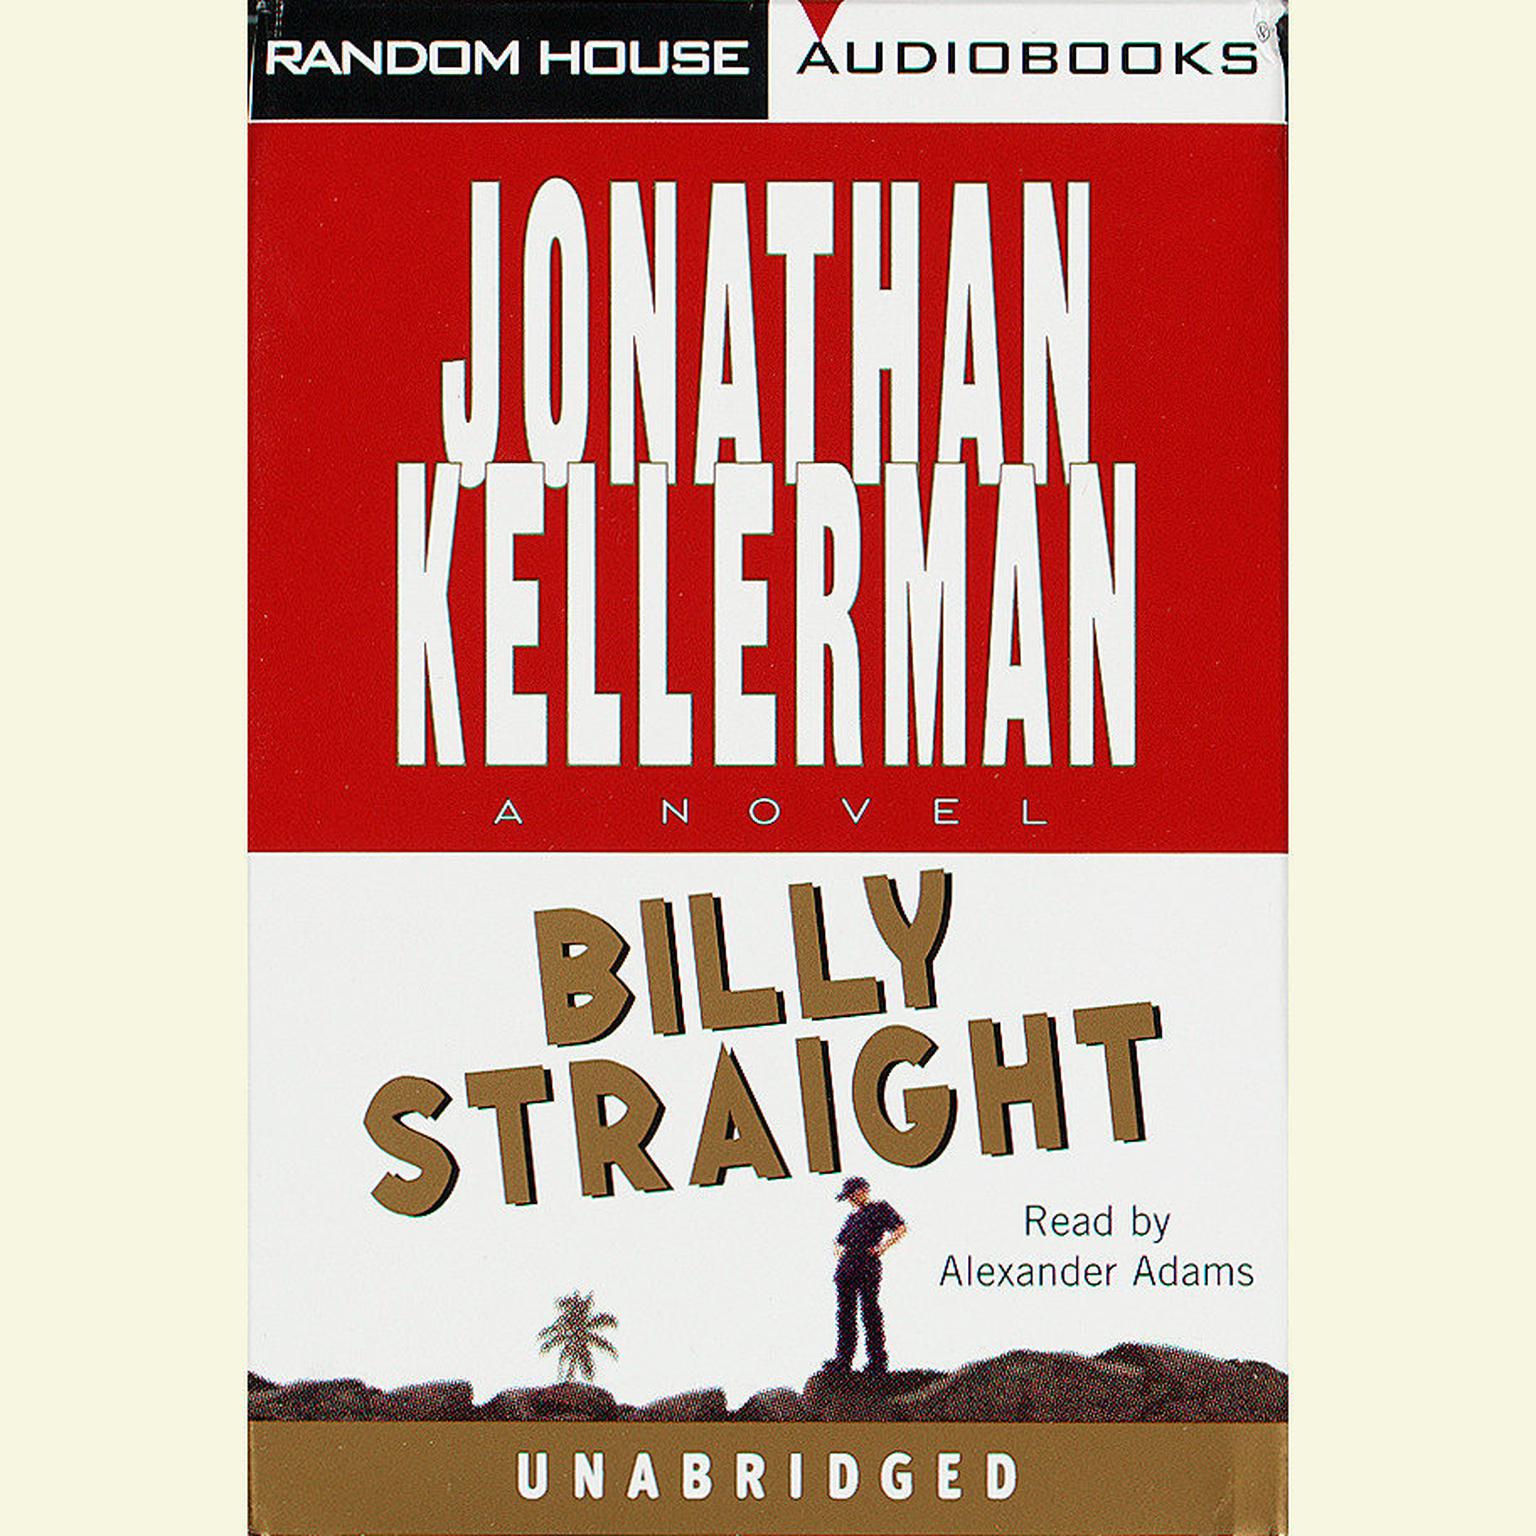 Billy Straight: A Novel Audiobook, by Jonathan Kellerman